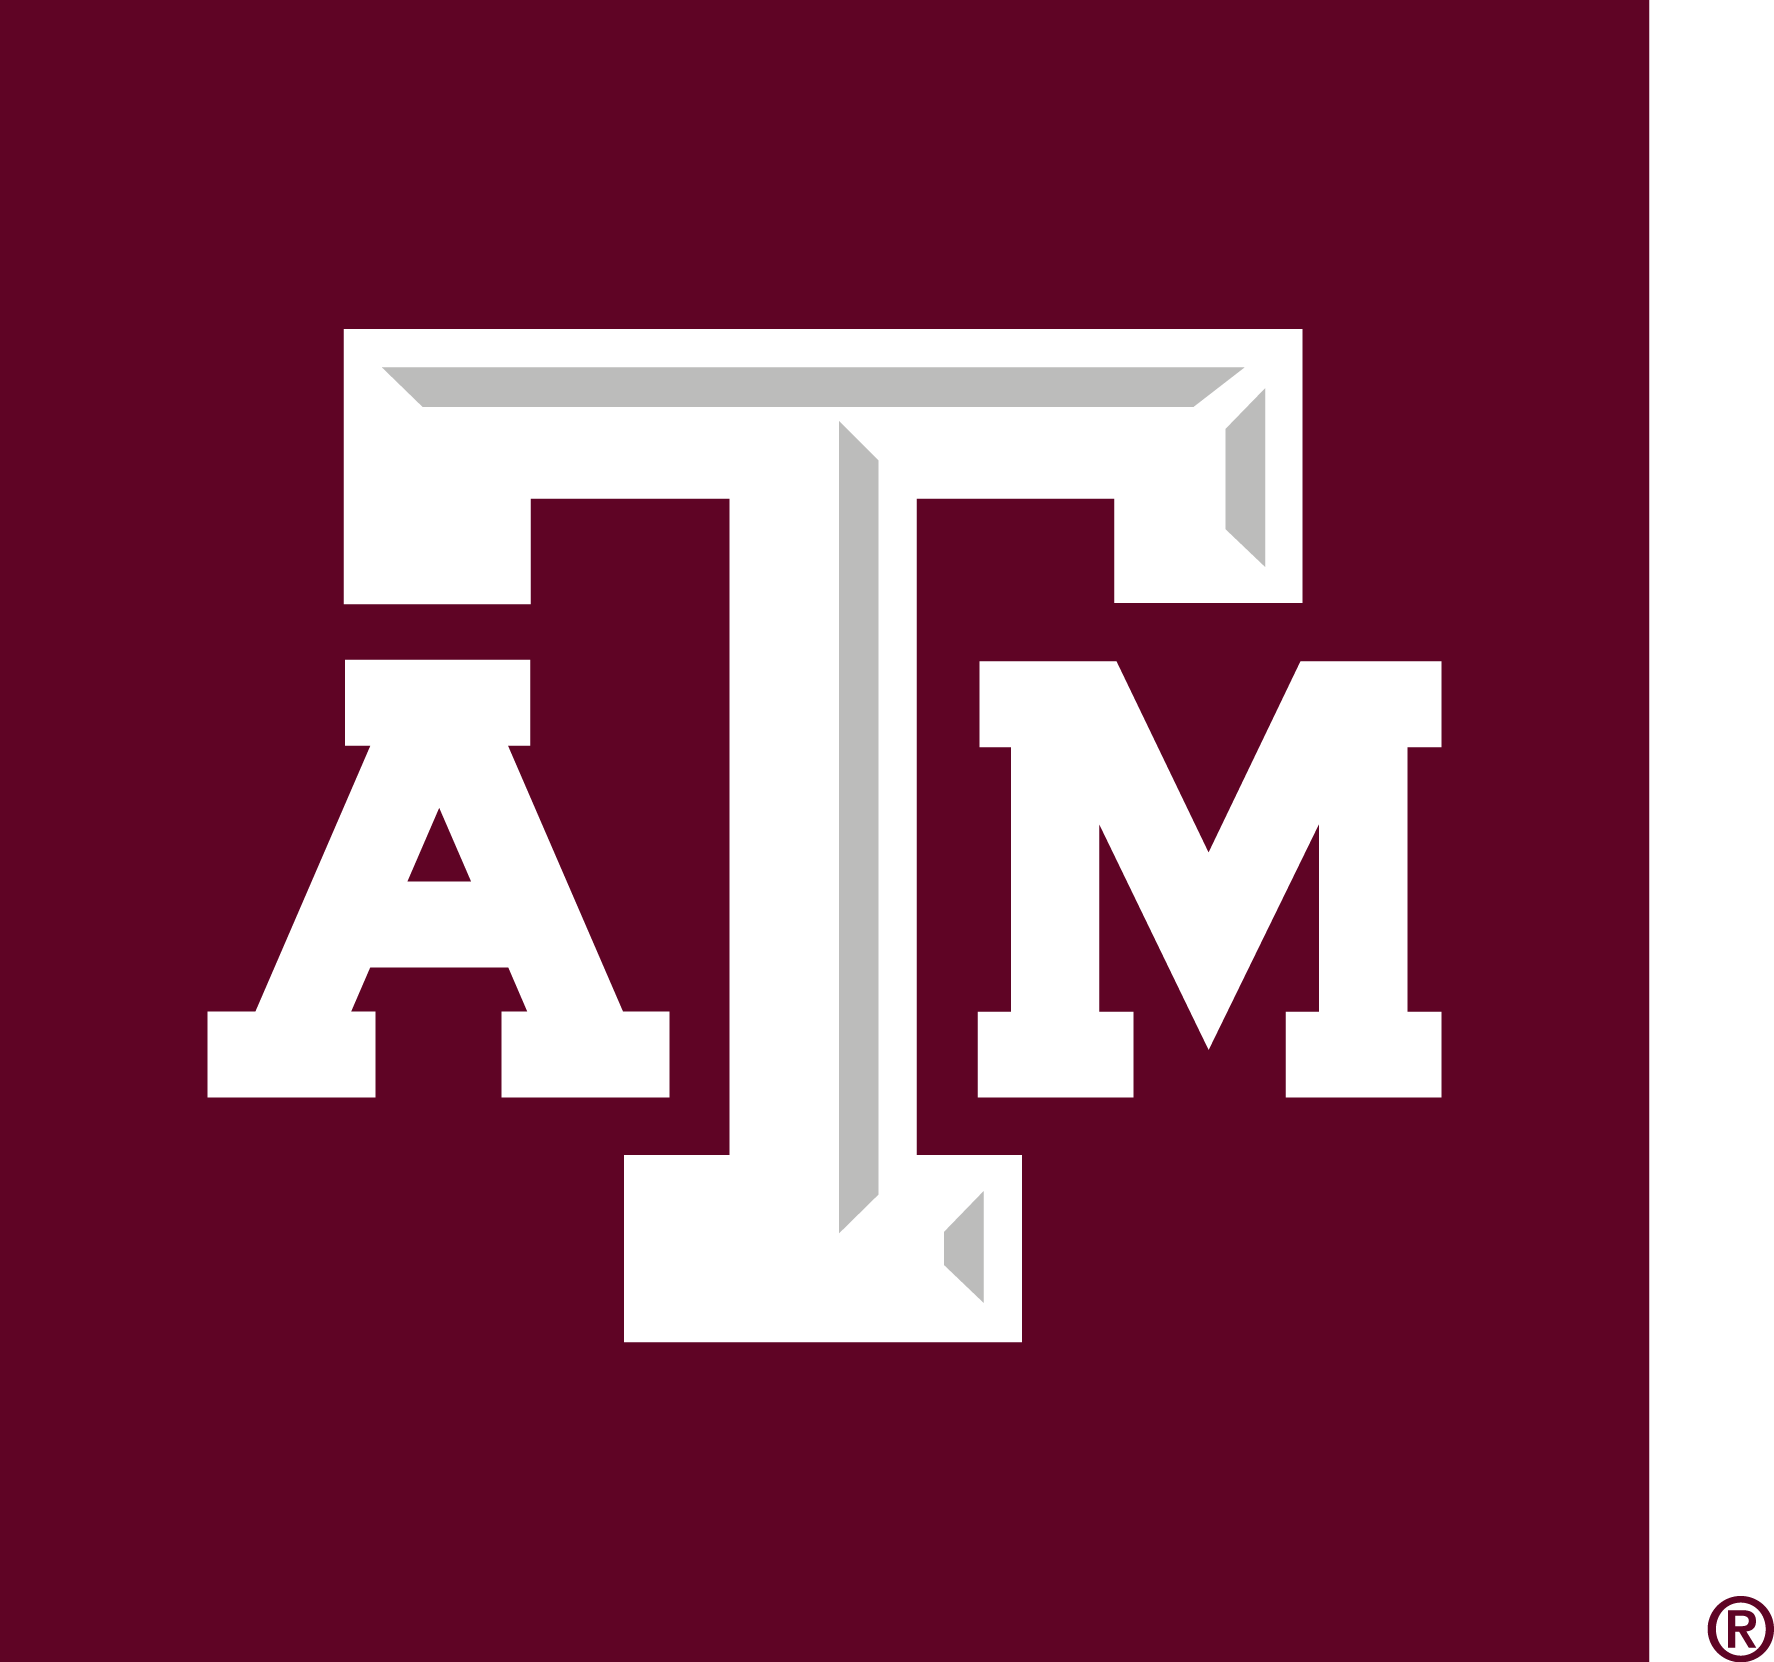 TAMU Logo   Texas A&M University png